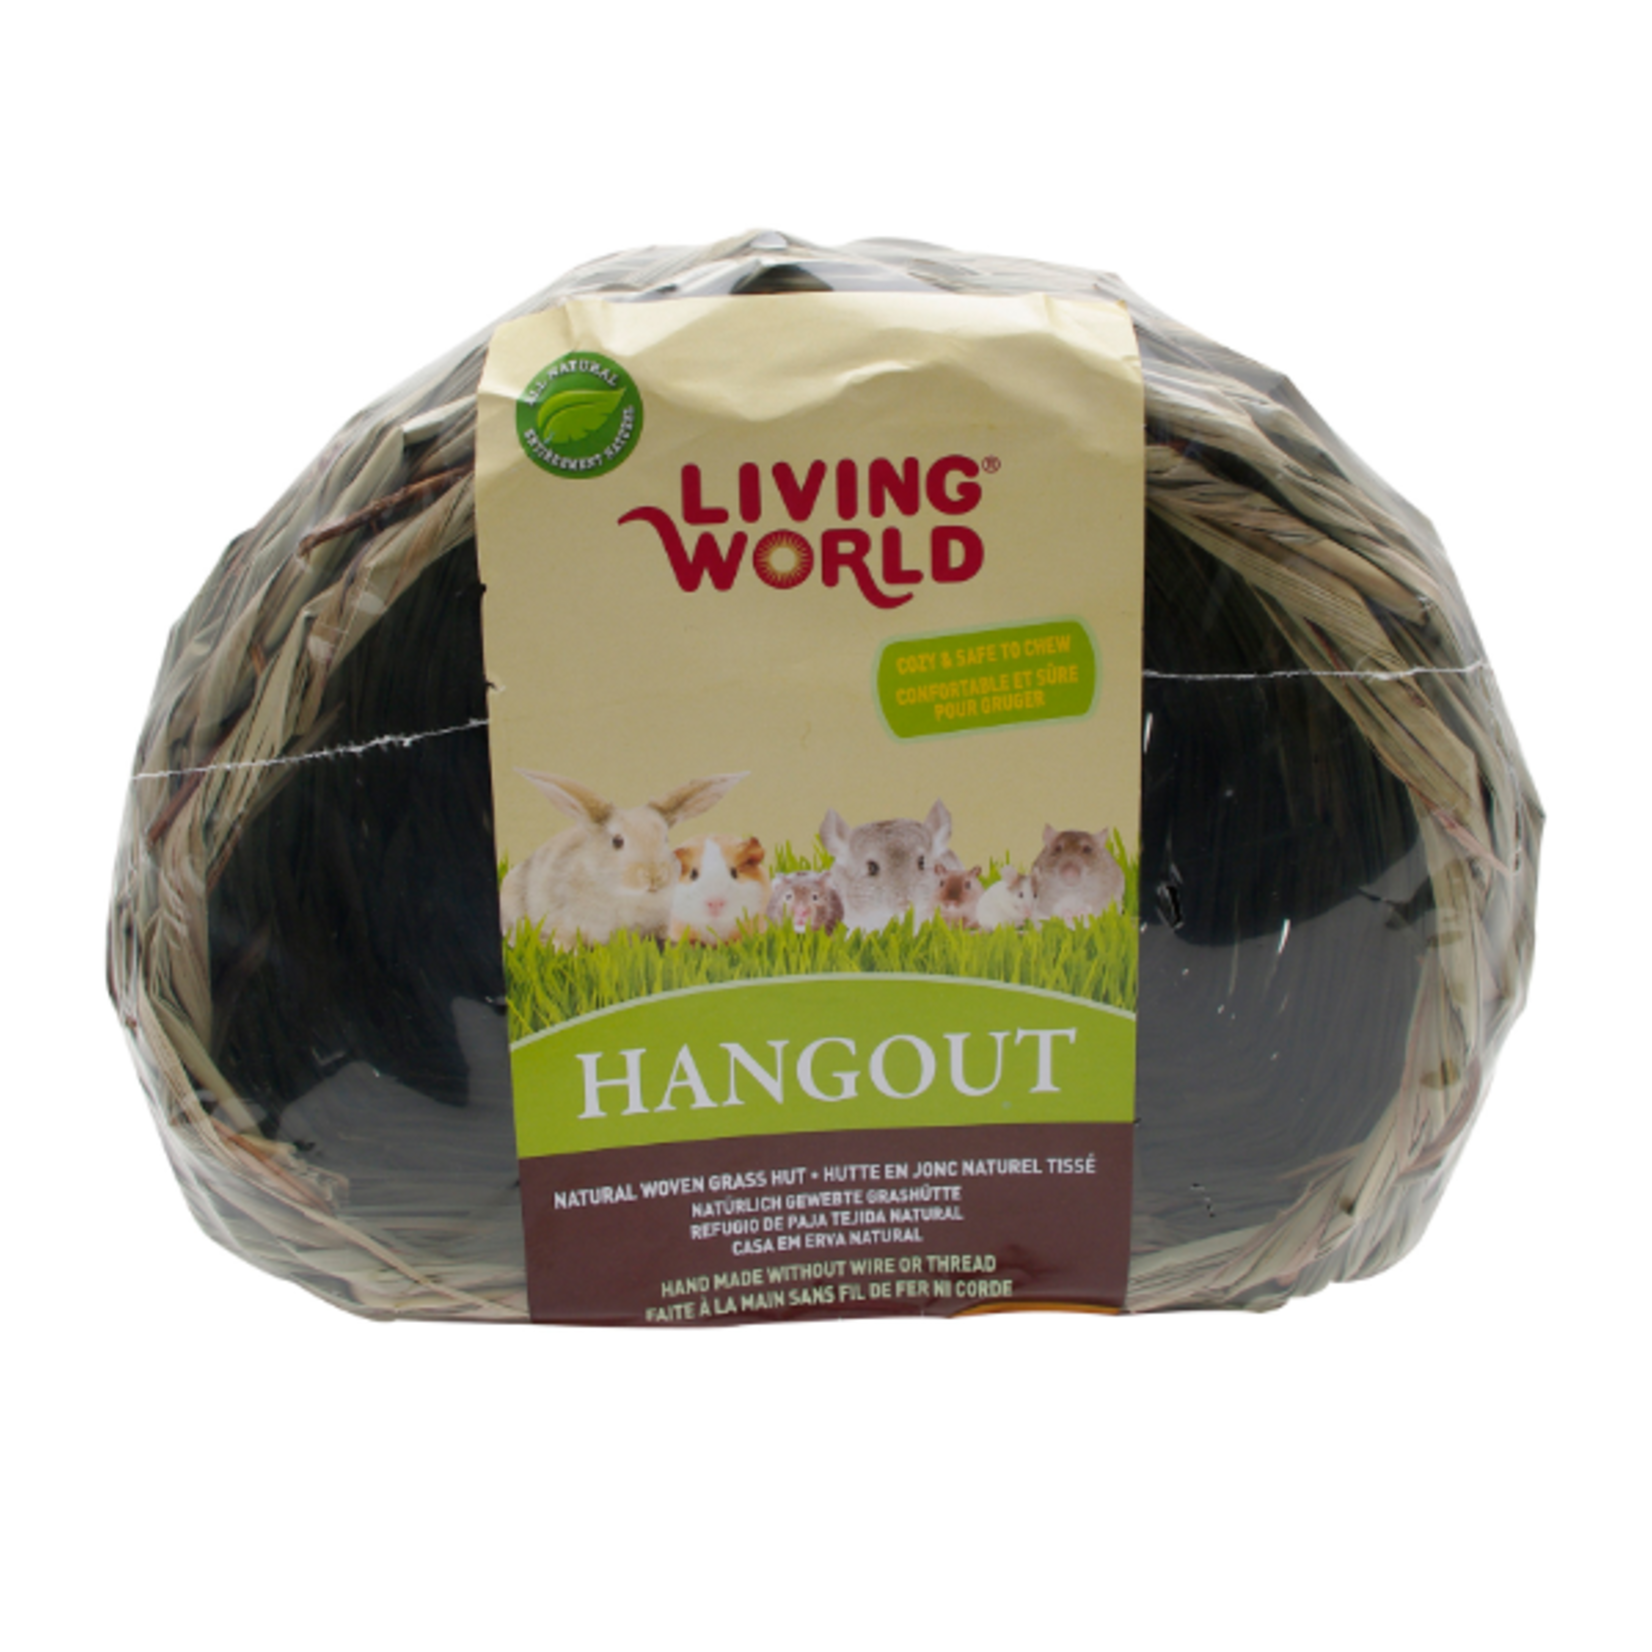 Living World Hangout Grass Hut - Large - 10 x 10 x 8.5 in